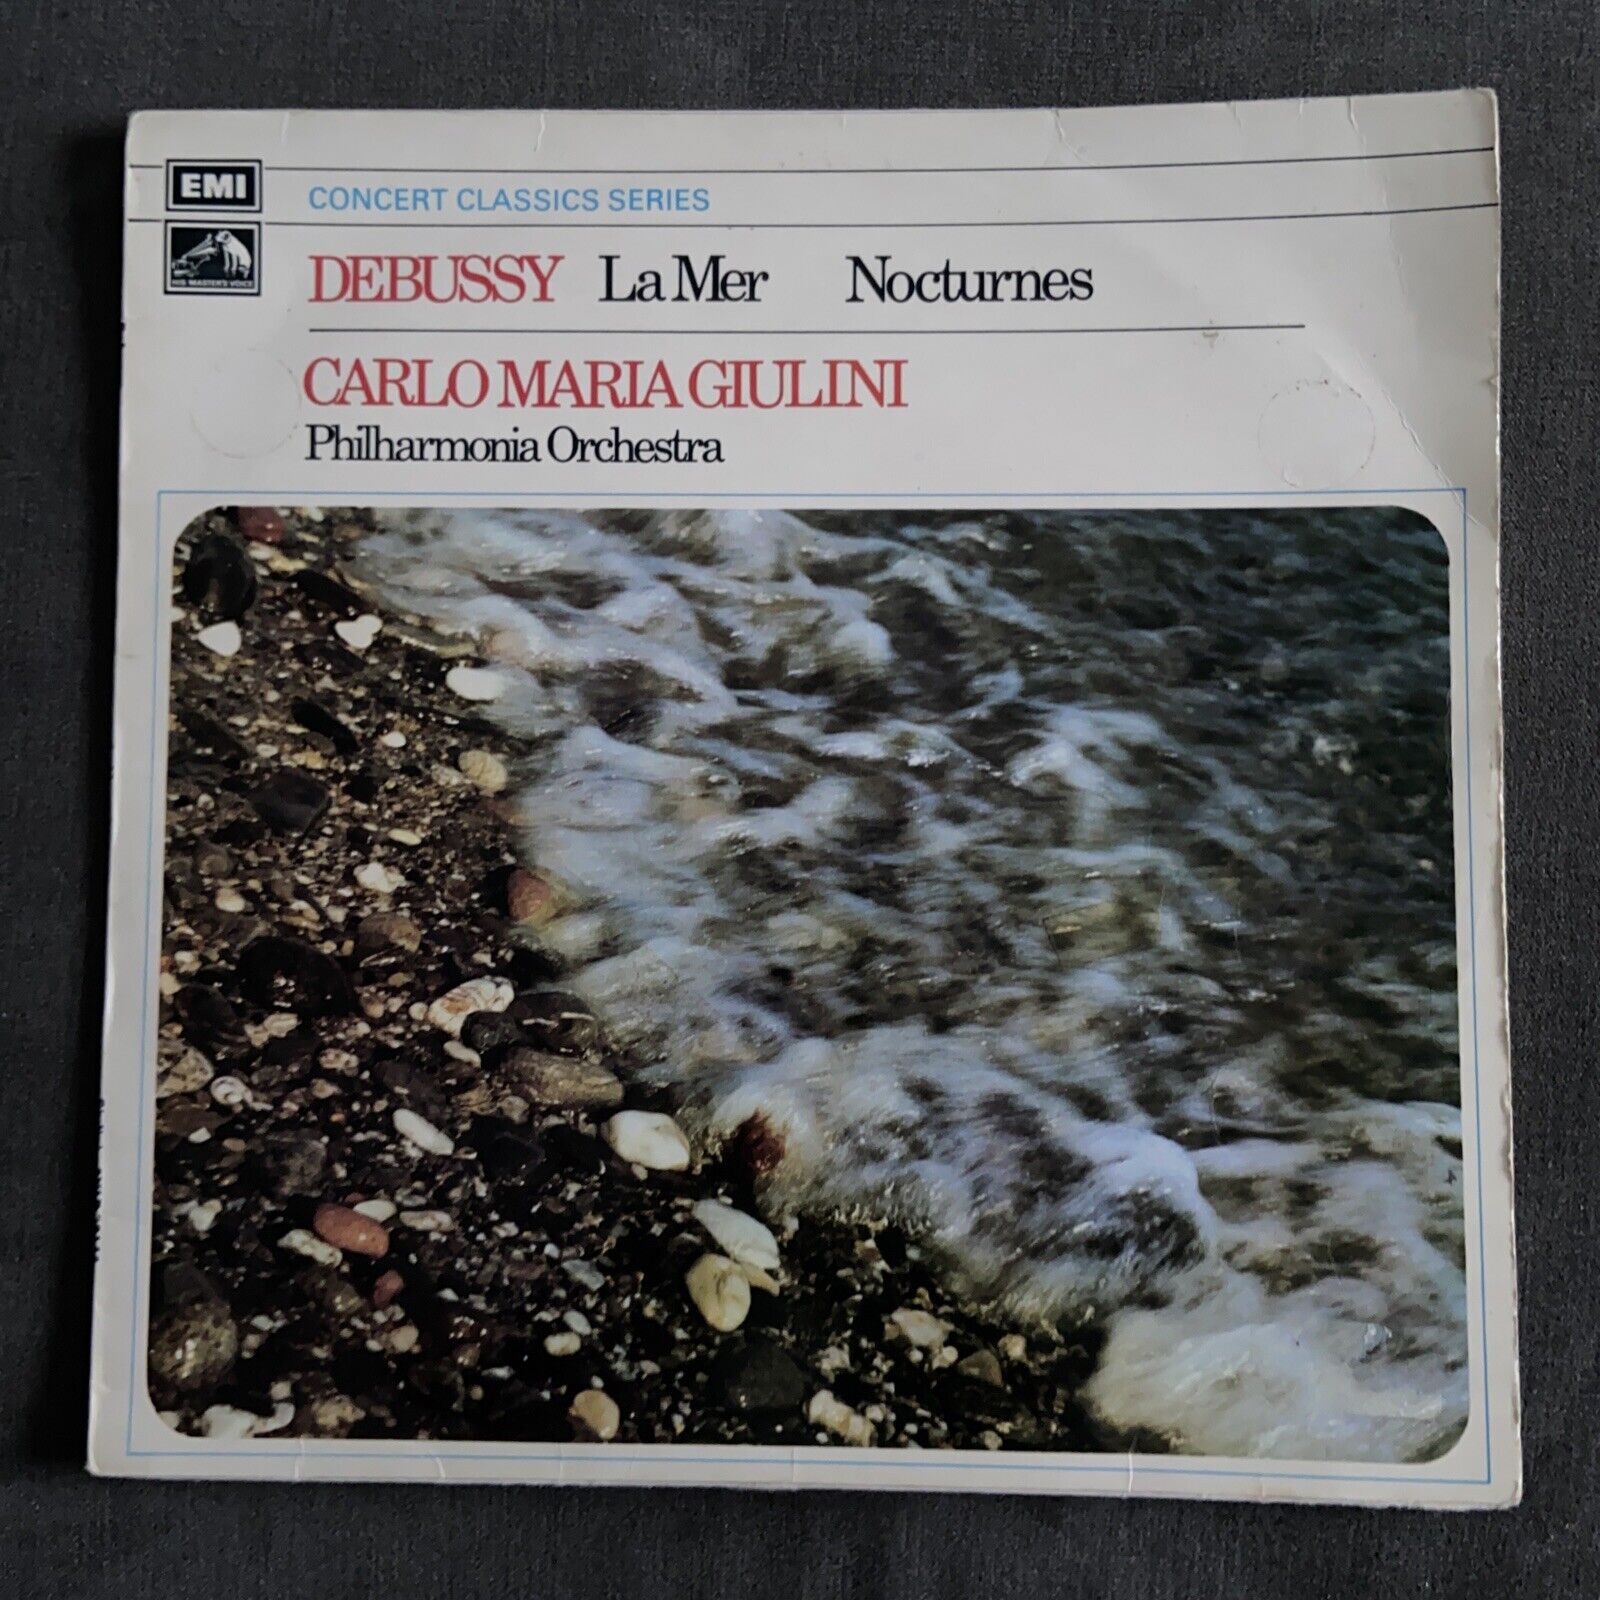 SXLP 30146 Debussy La Mer Nocturnes HMV LP Carlo Maria Giulini 1962